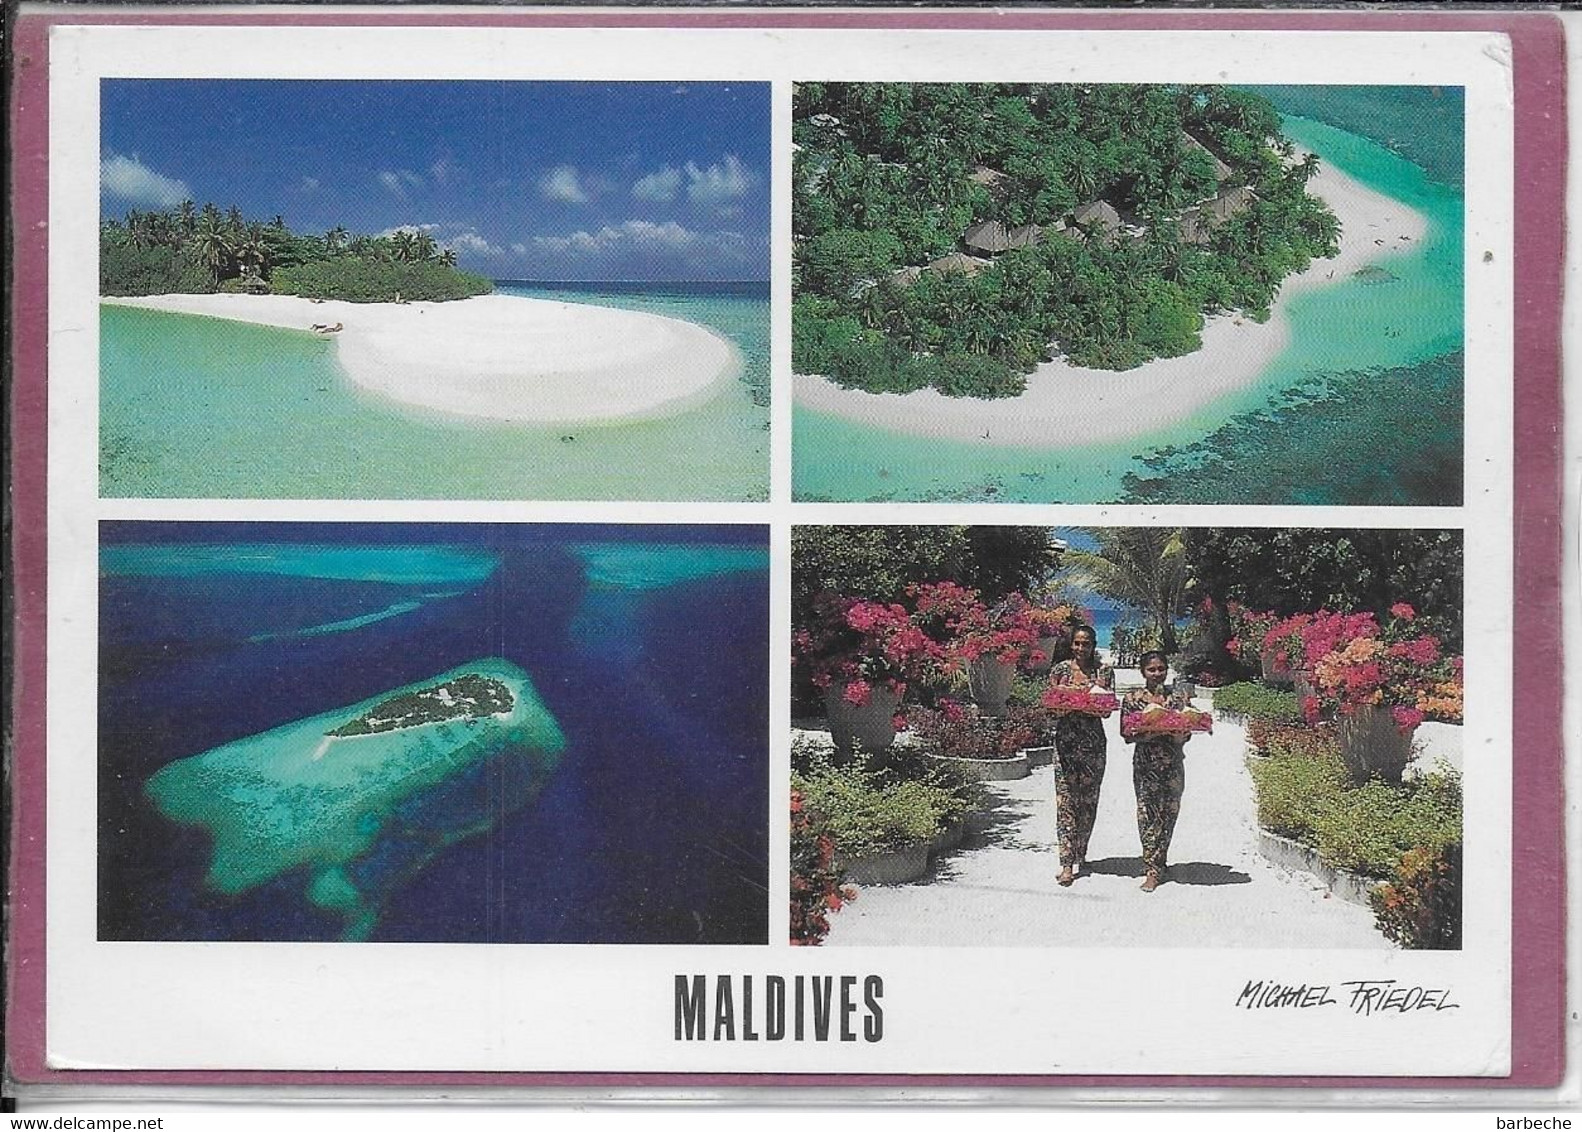 MALDIVES - Embudu - Maldivas